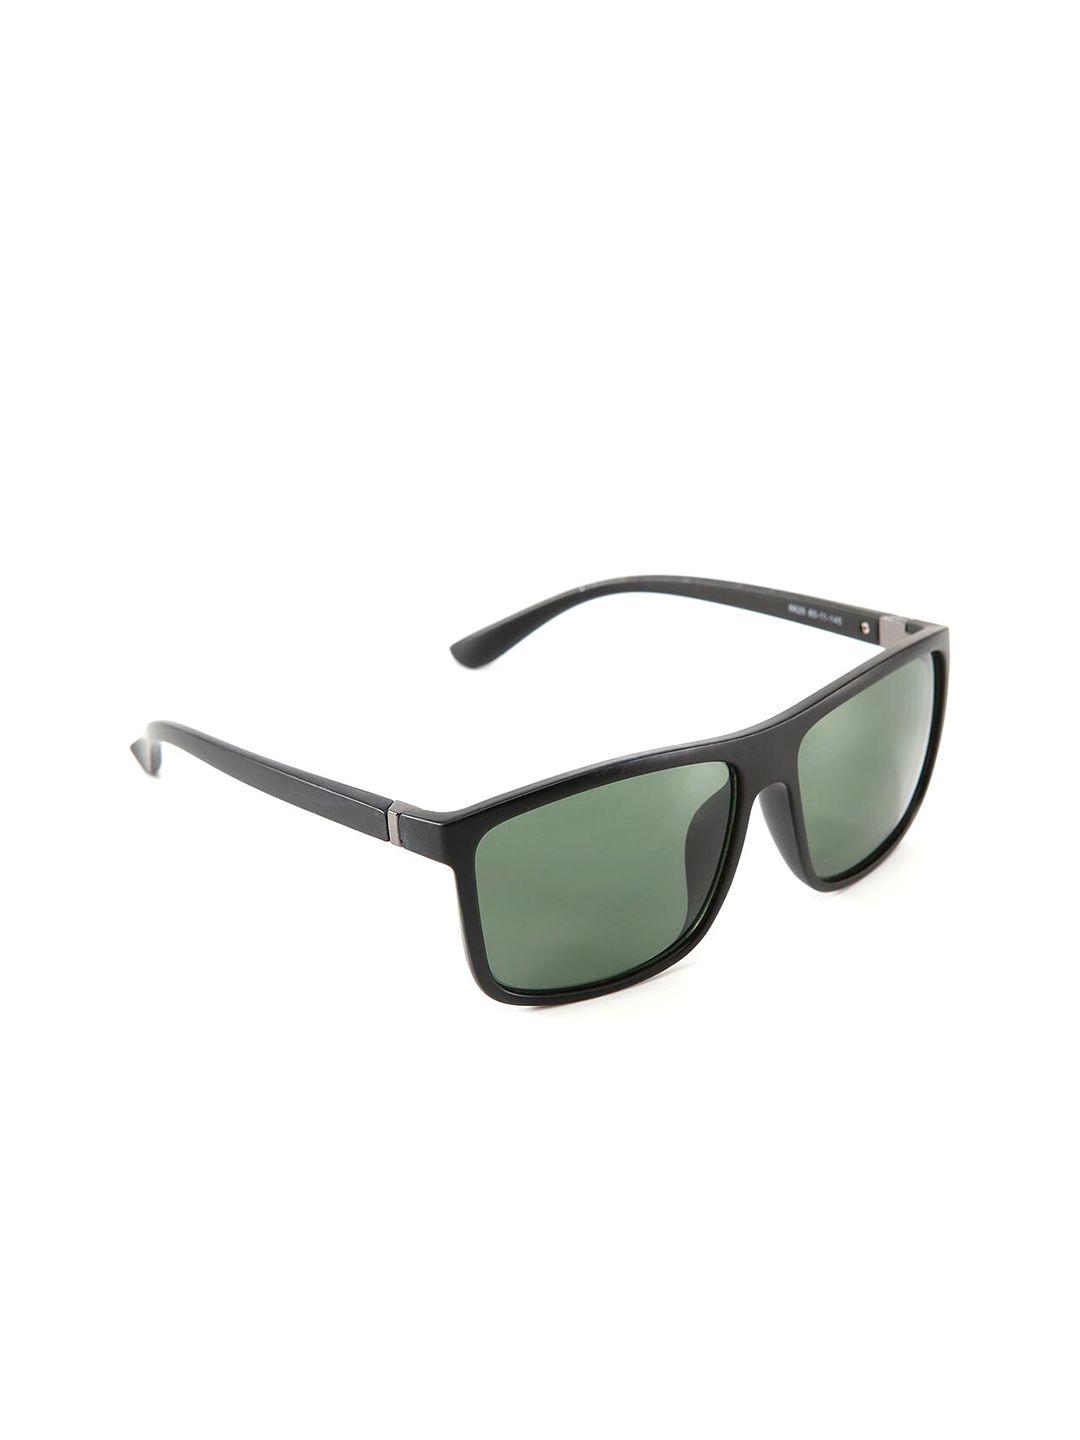 intellilens unisex green lens & black square sunglasses with uv protected lens 1000000060961